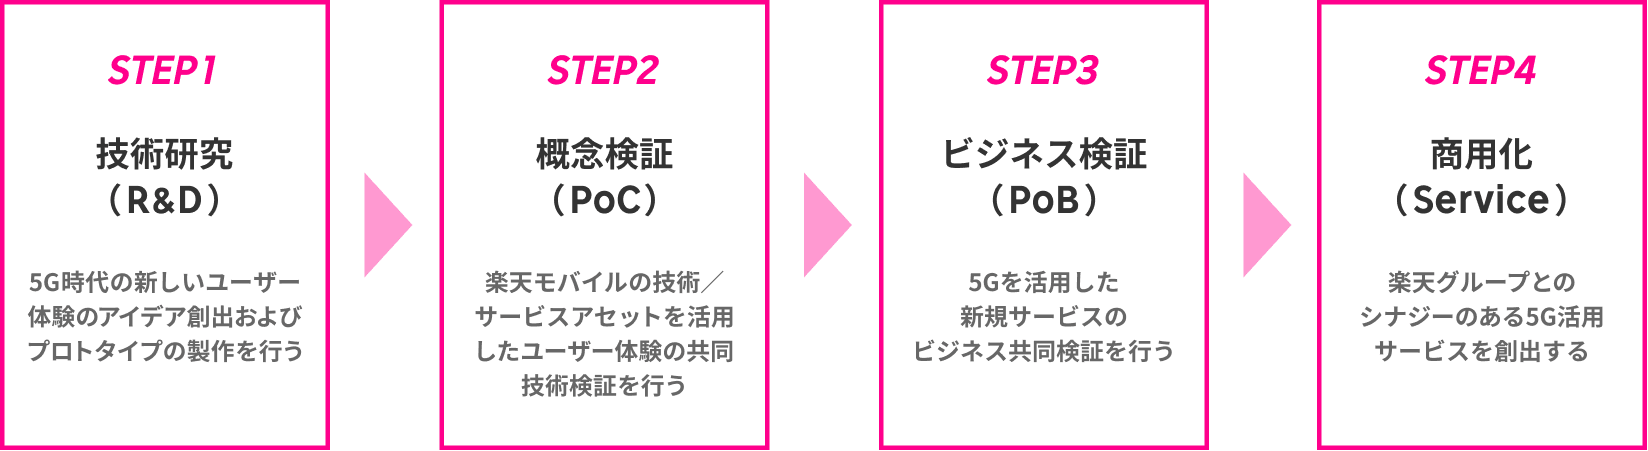 STEP1 技術研究（R&D）、STEP2 概念検証（PoC）、STEP3 ビジネス検証（PoB）、STEP4 商用化（Service）